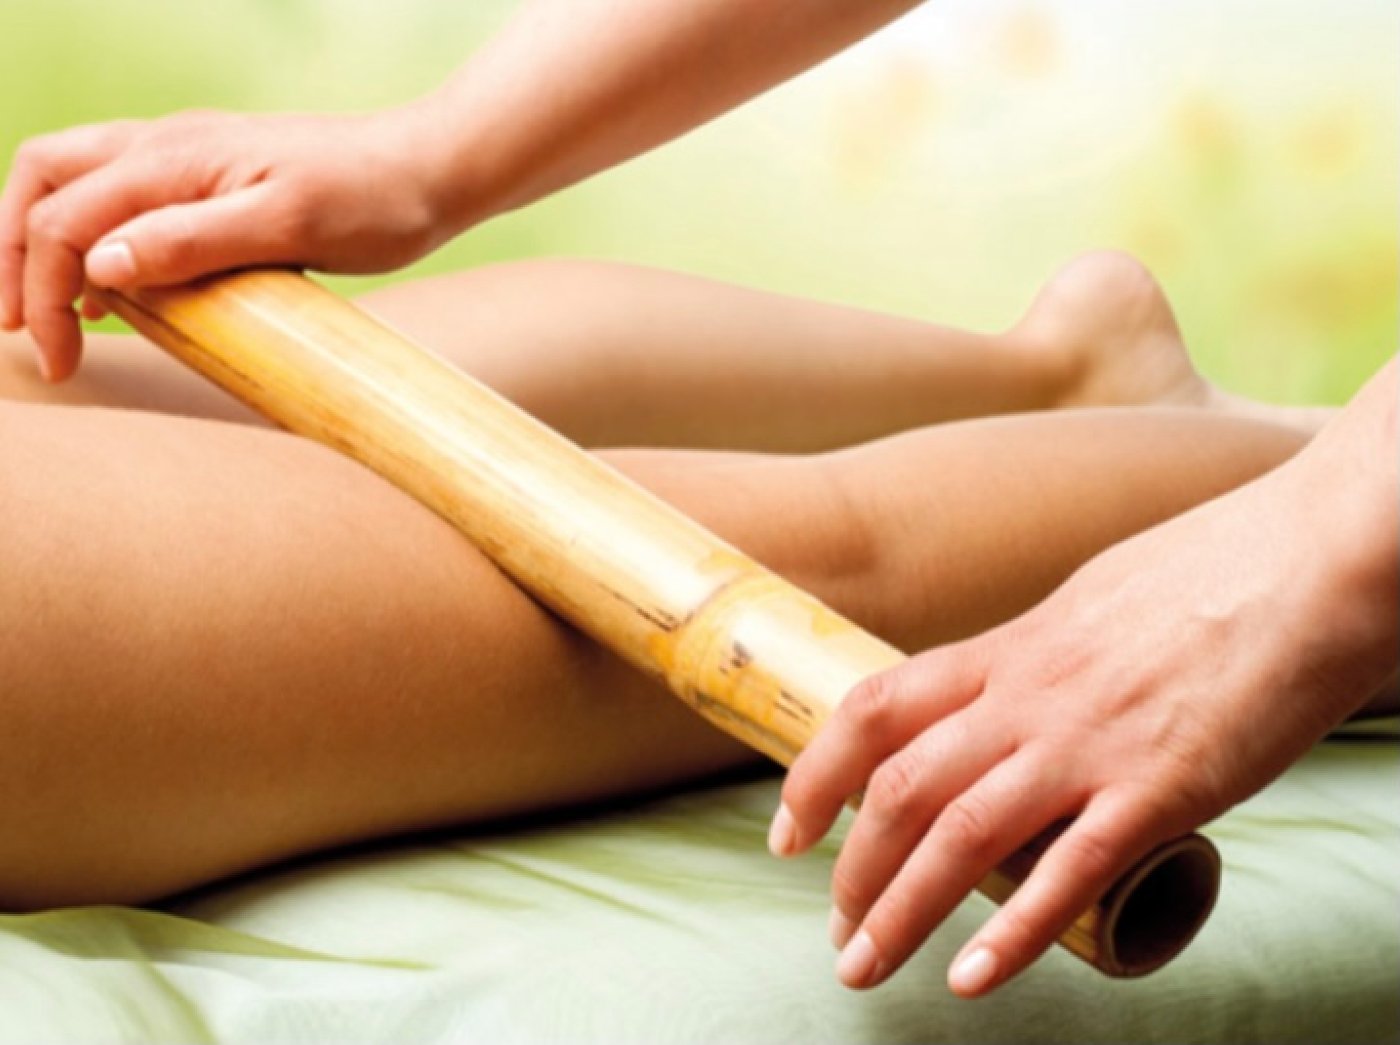 Massage bambou - Reflet de soi | Véronique Meylan